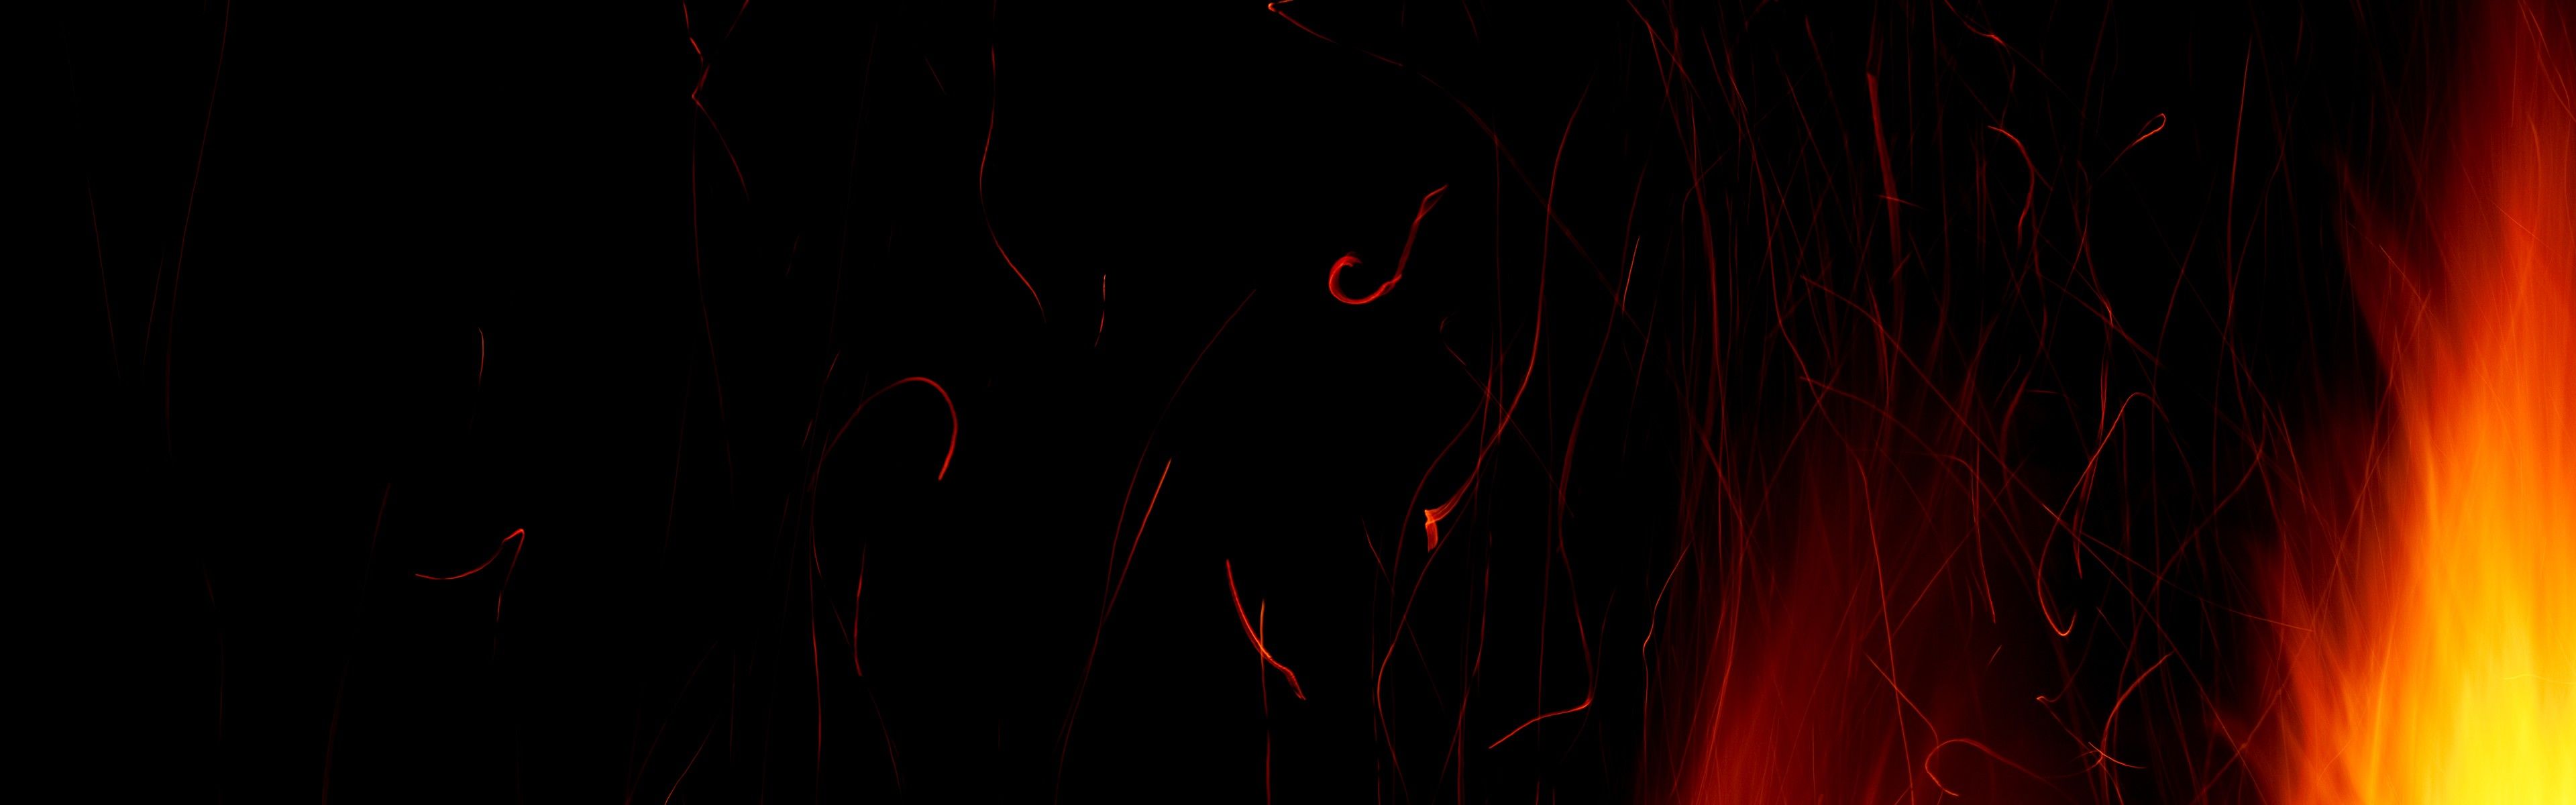 Wallpaper Orange Fire in Black Background, Background - Download Free Image